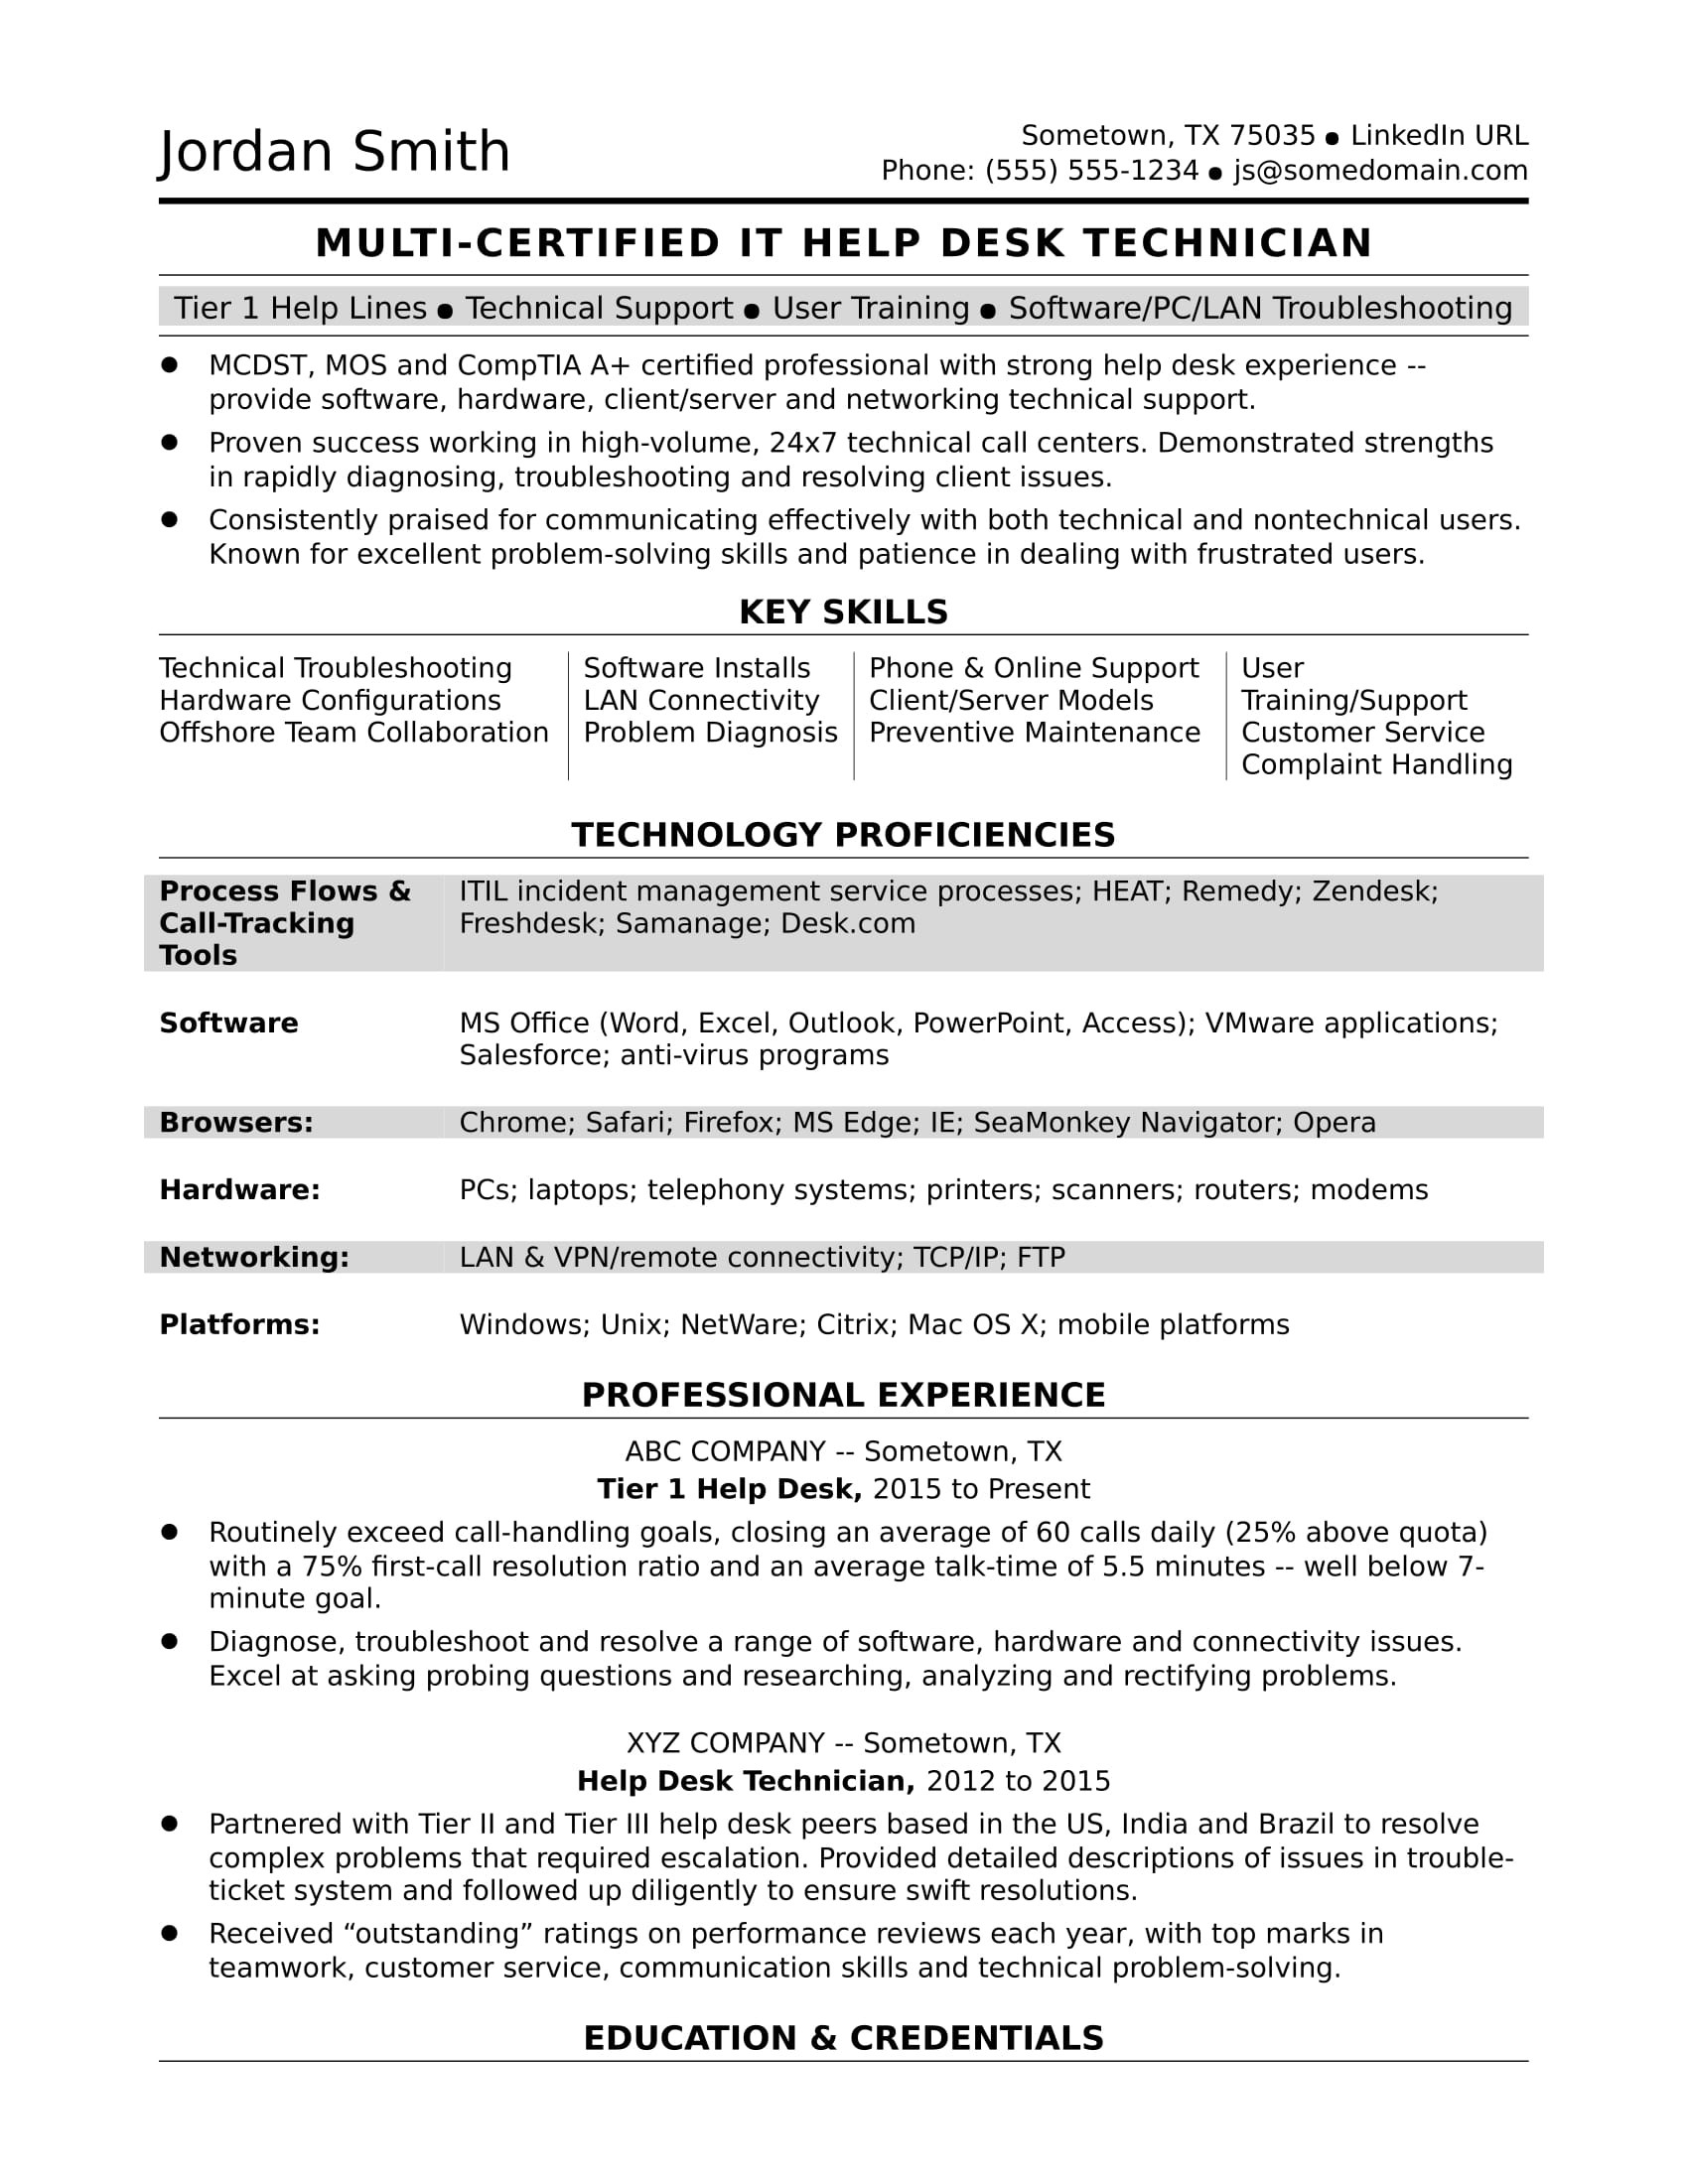 Sample Helpdesk Technician Level 1 Resumes Sample Resume for A Midlevel It Help Desk Professional Monster.com